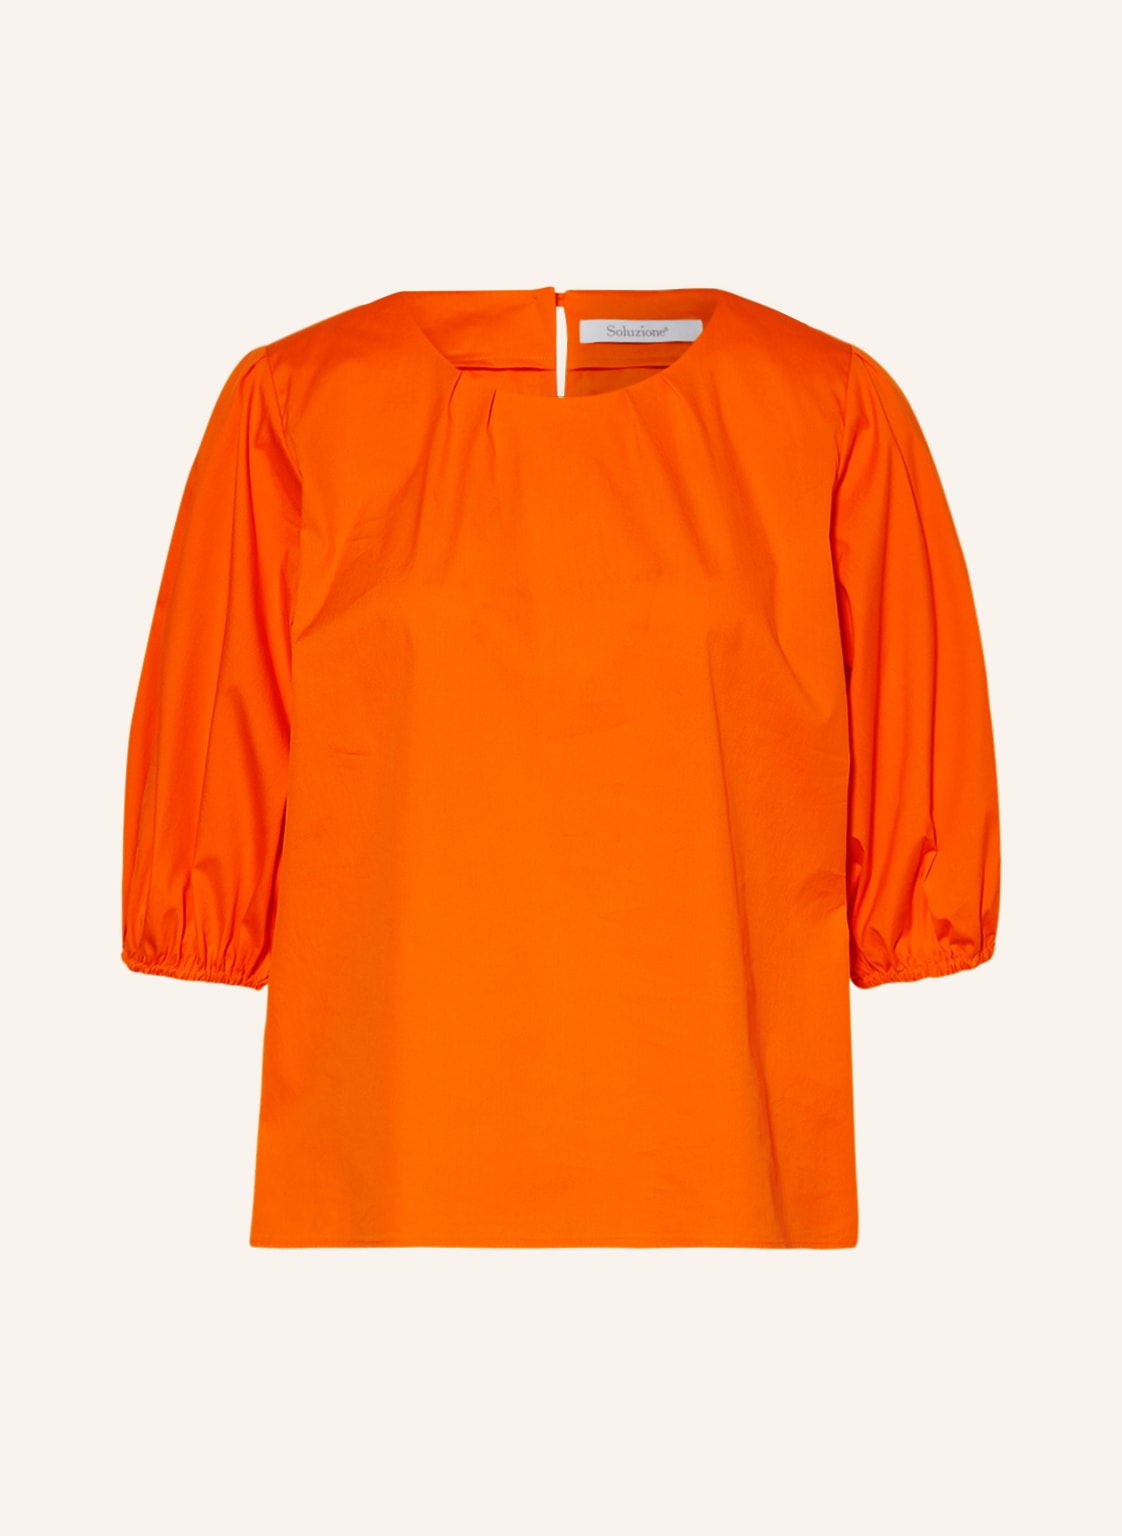 Image of Soluzione Blusenshirt Mit 3/4-Arm orange